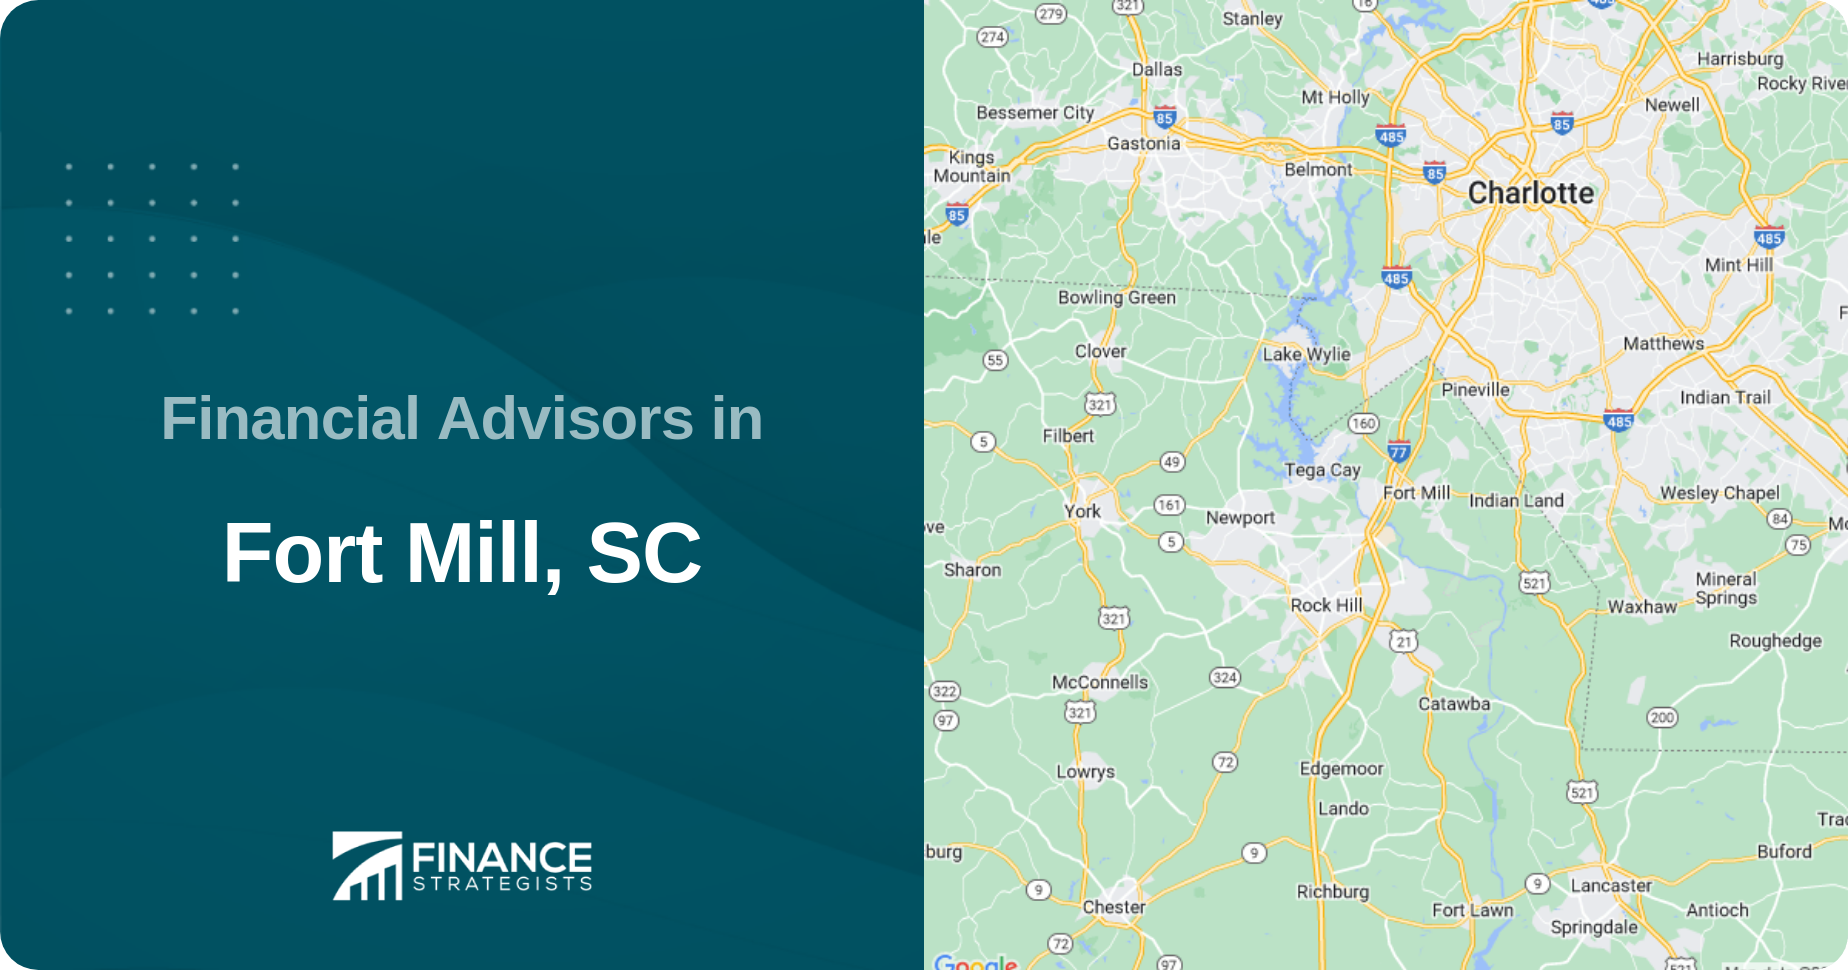 Financial Advisors in Fort Mill, SC